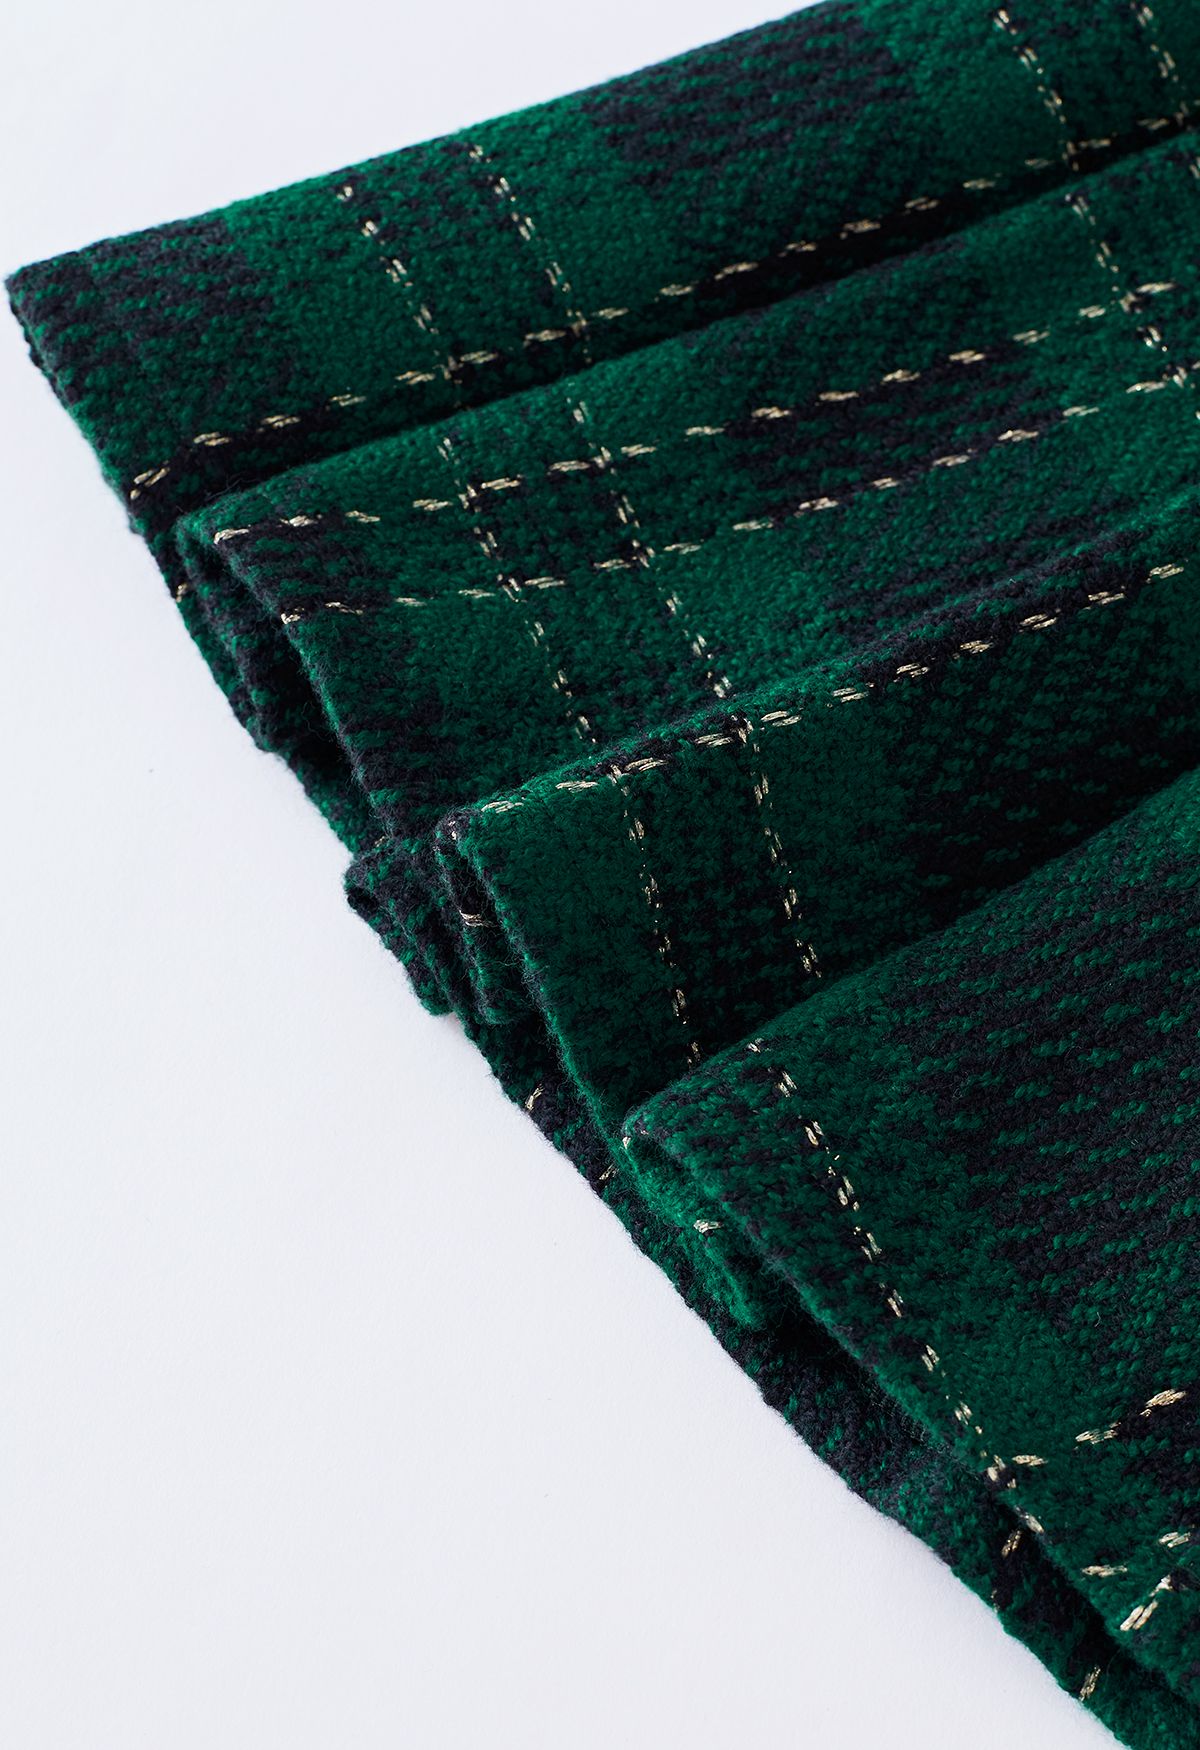 Metallic Plaid Tweed Crop Jacket and Pleated Skirt Set in Green